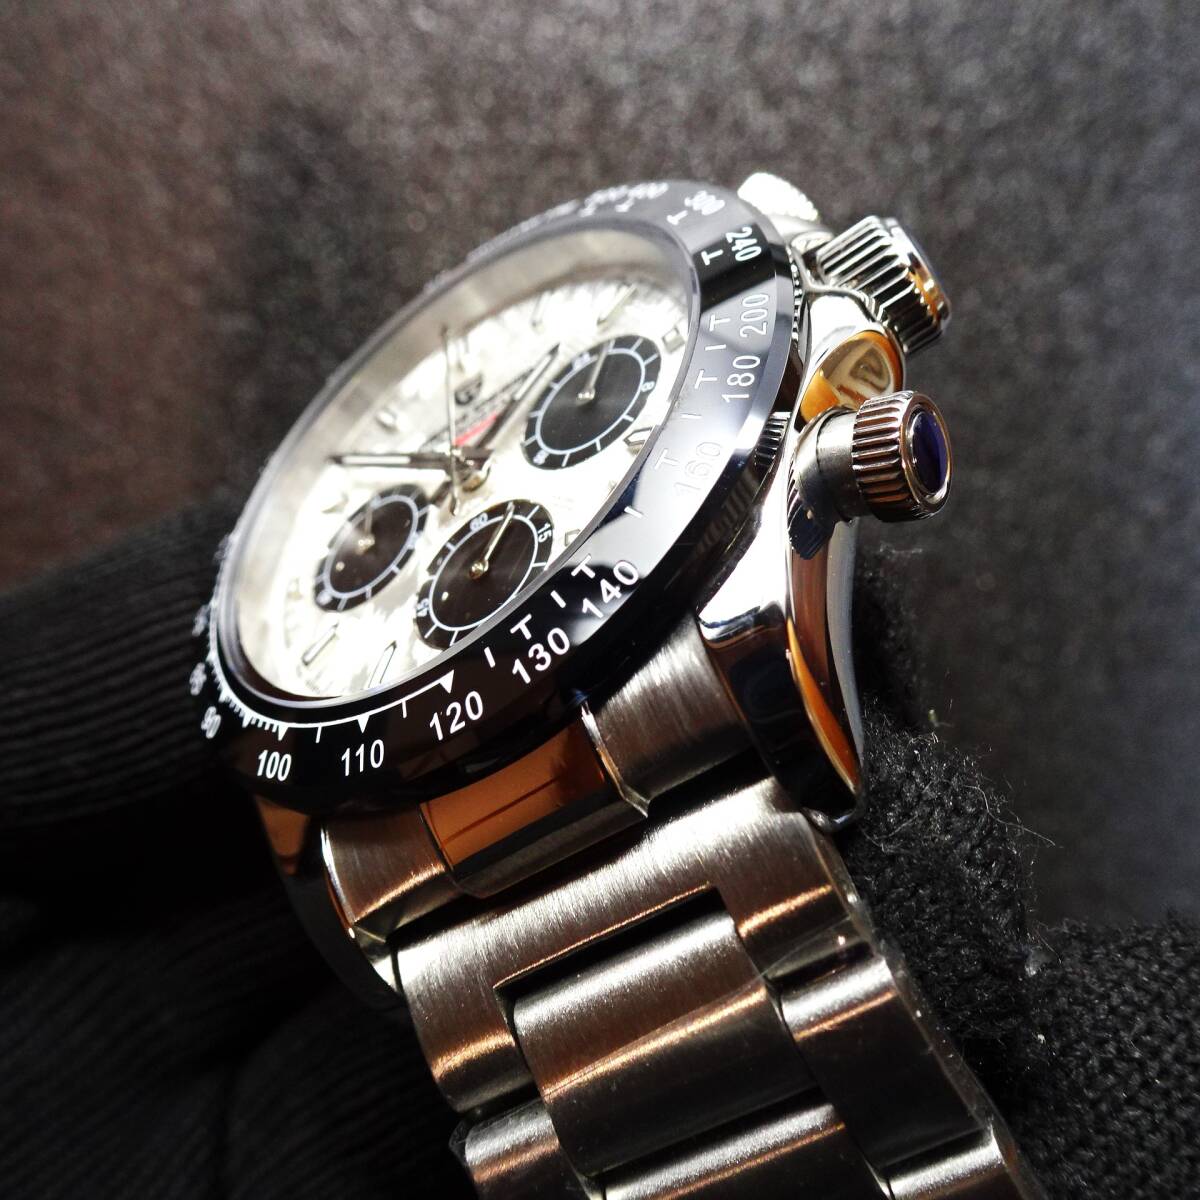  free shipping * new goods * Pagani design * men's * Seiko made VK63 chronograph quarts type wristwatch * full metal *oma-ju watch *PD-1664